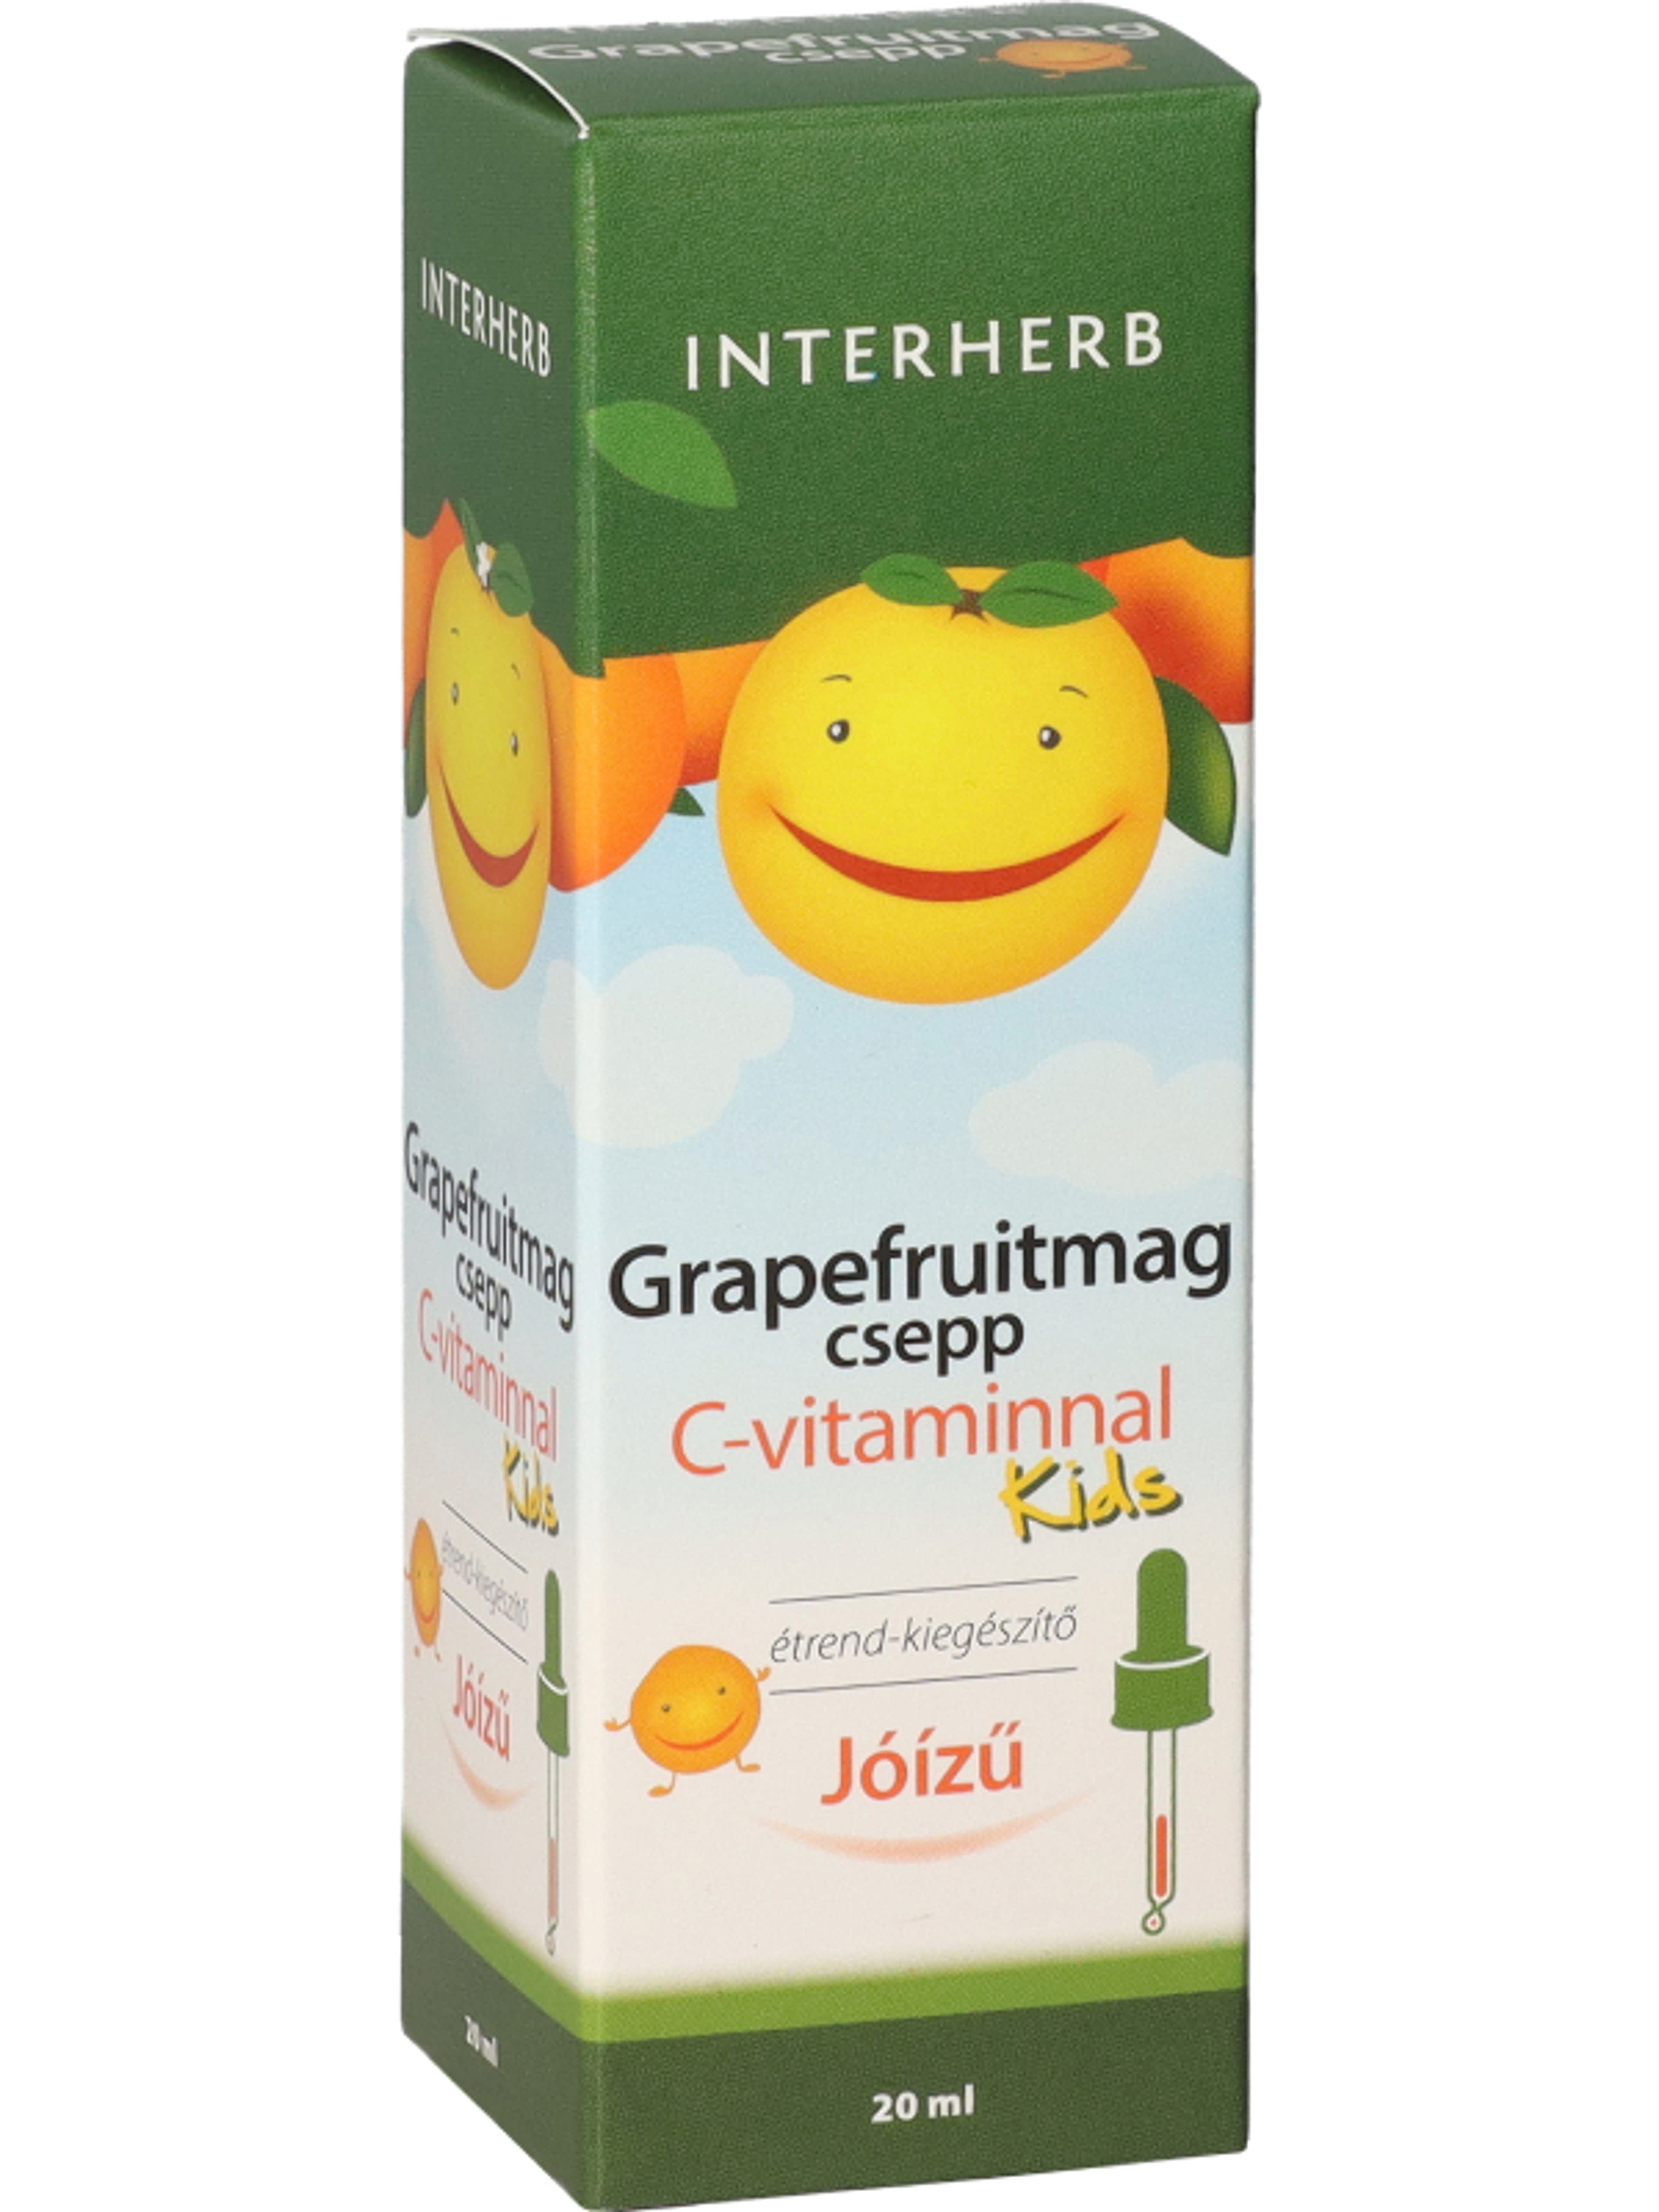 Interherb Vital Grapefruitmag Kids C-Vitaminnal Csepp - 20 ml-1